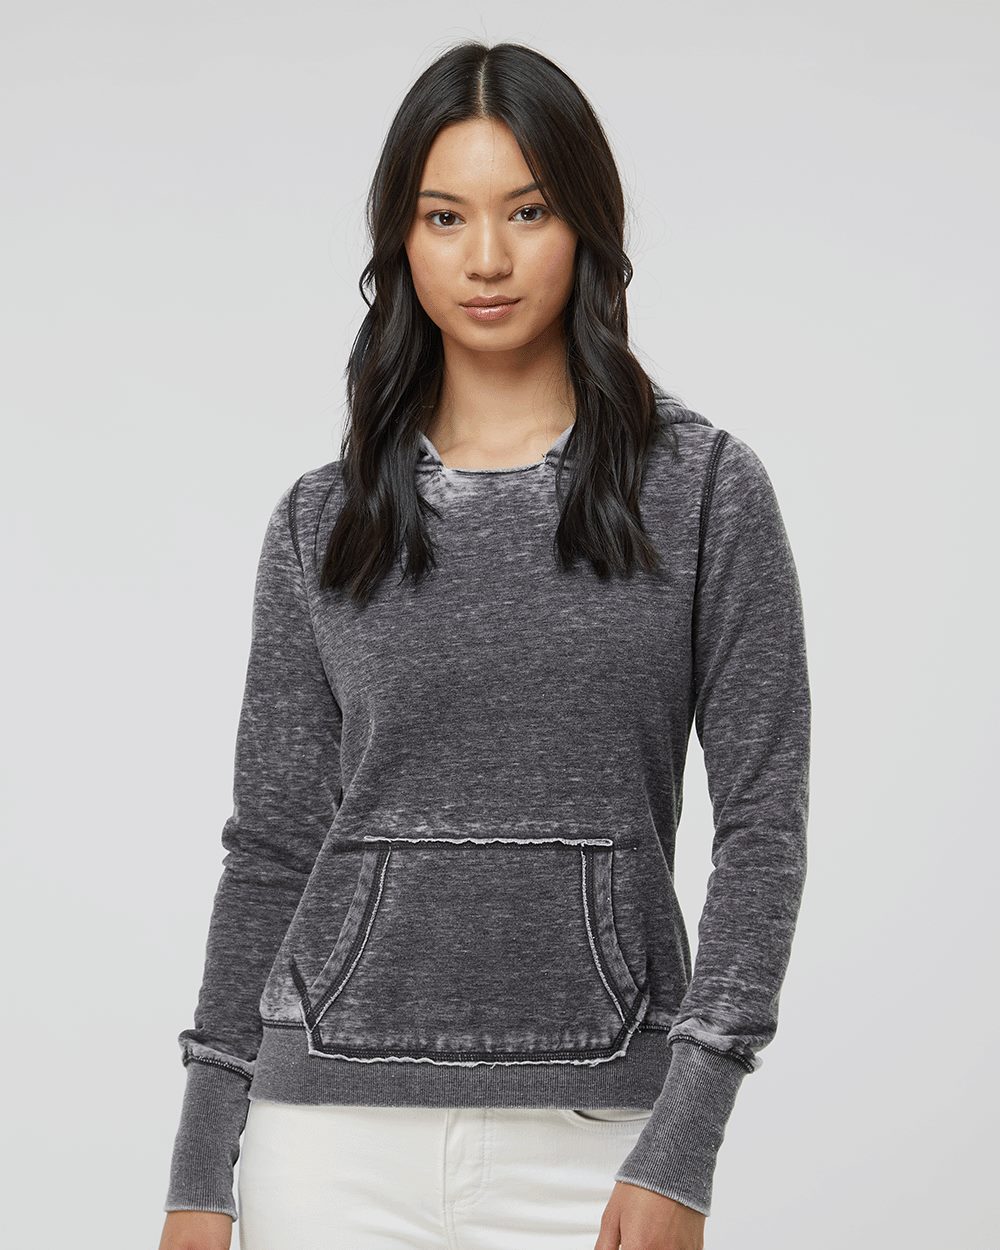 J. America 8912 - Women's Zen Fleece Hooded Sweatshirt